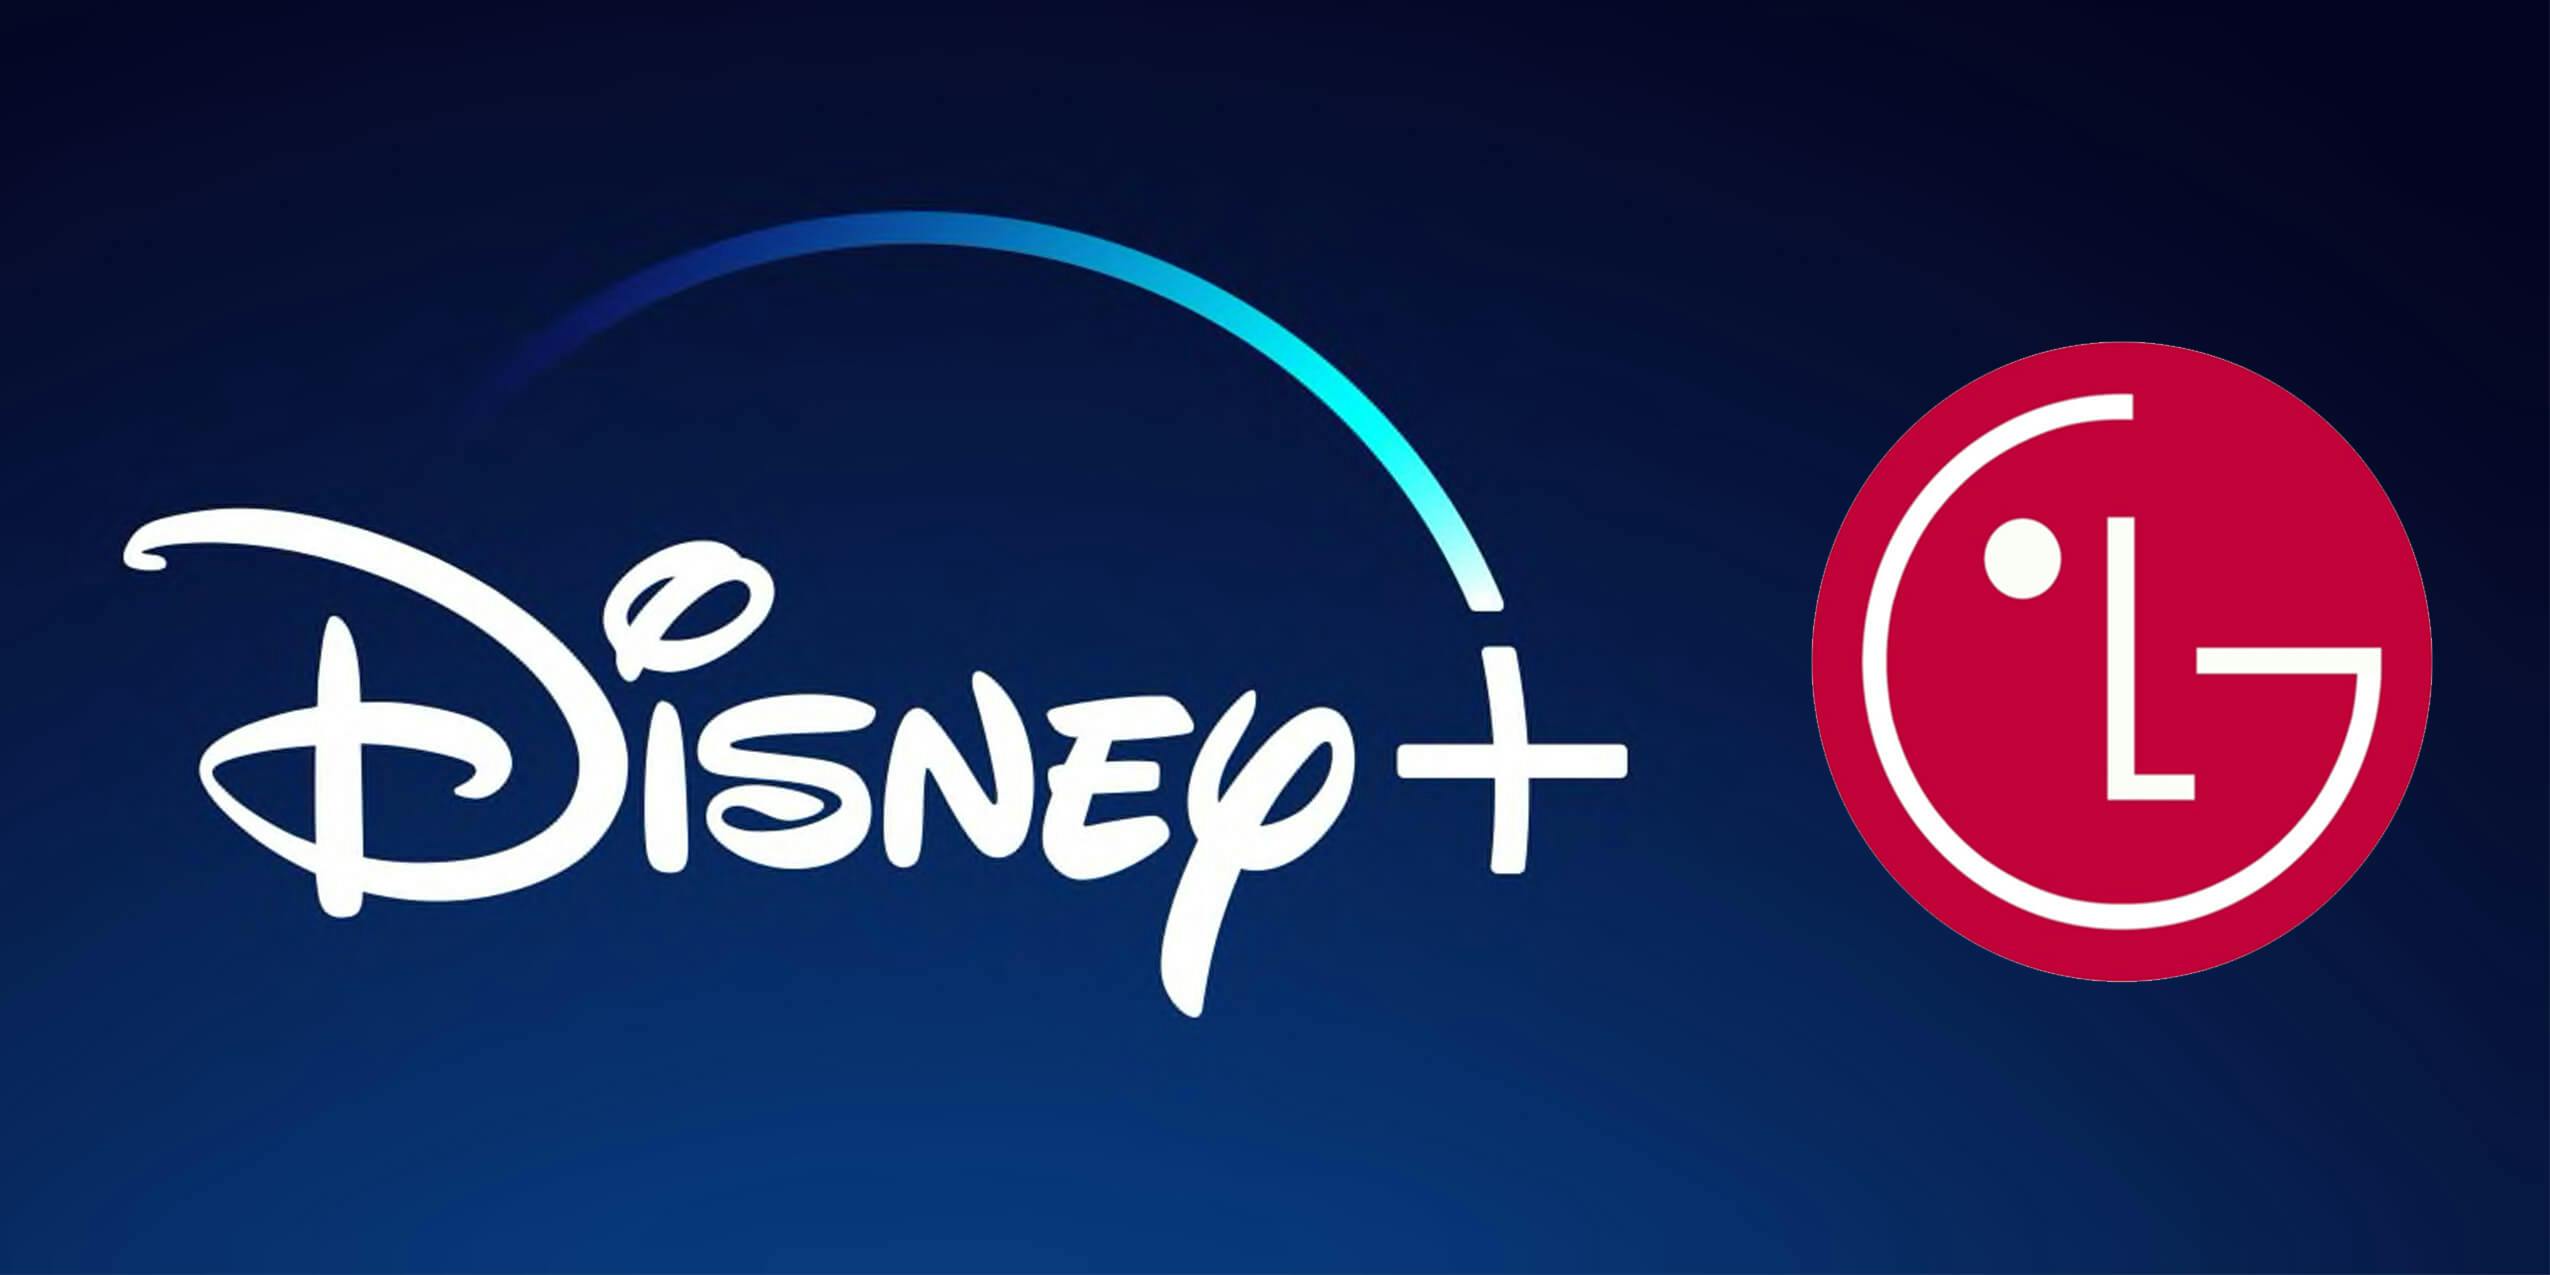 Disney Plus Lg Smart Tv Streaming How To Watch Disney Plus